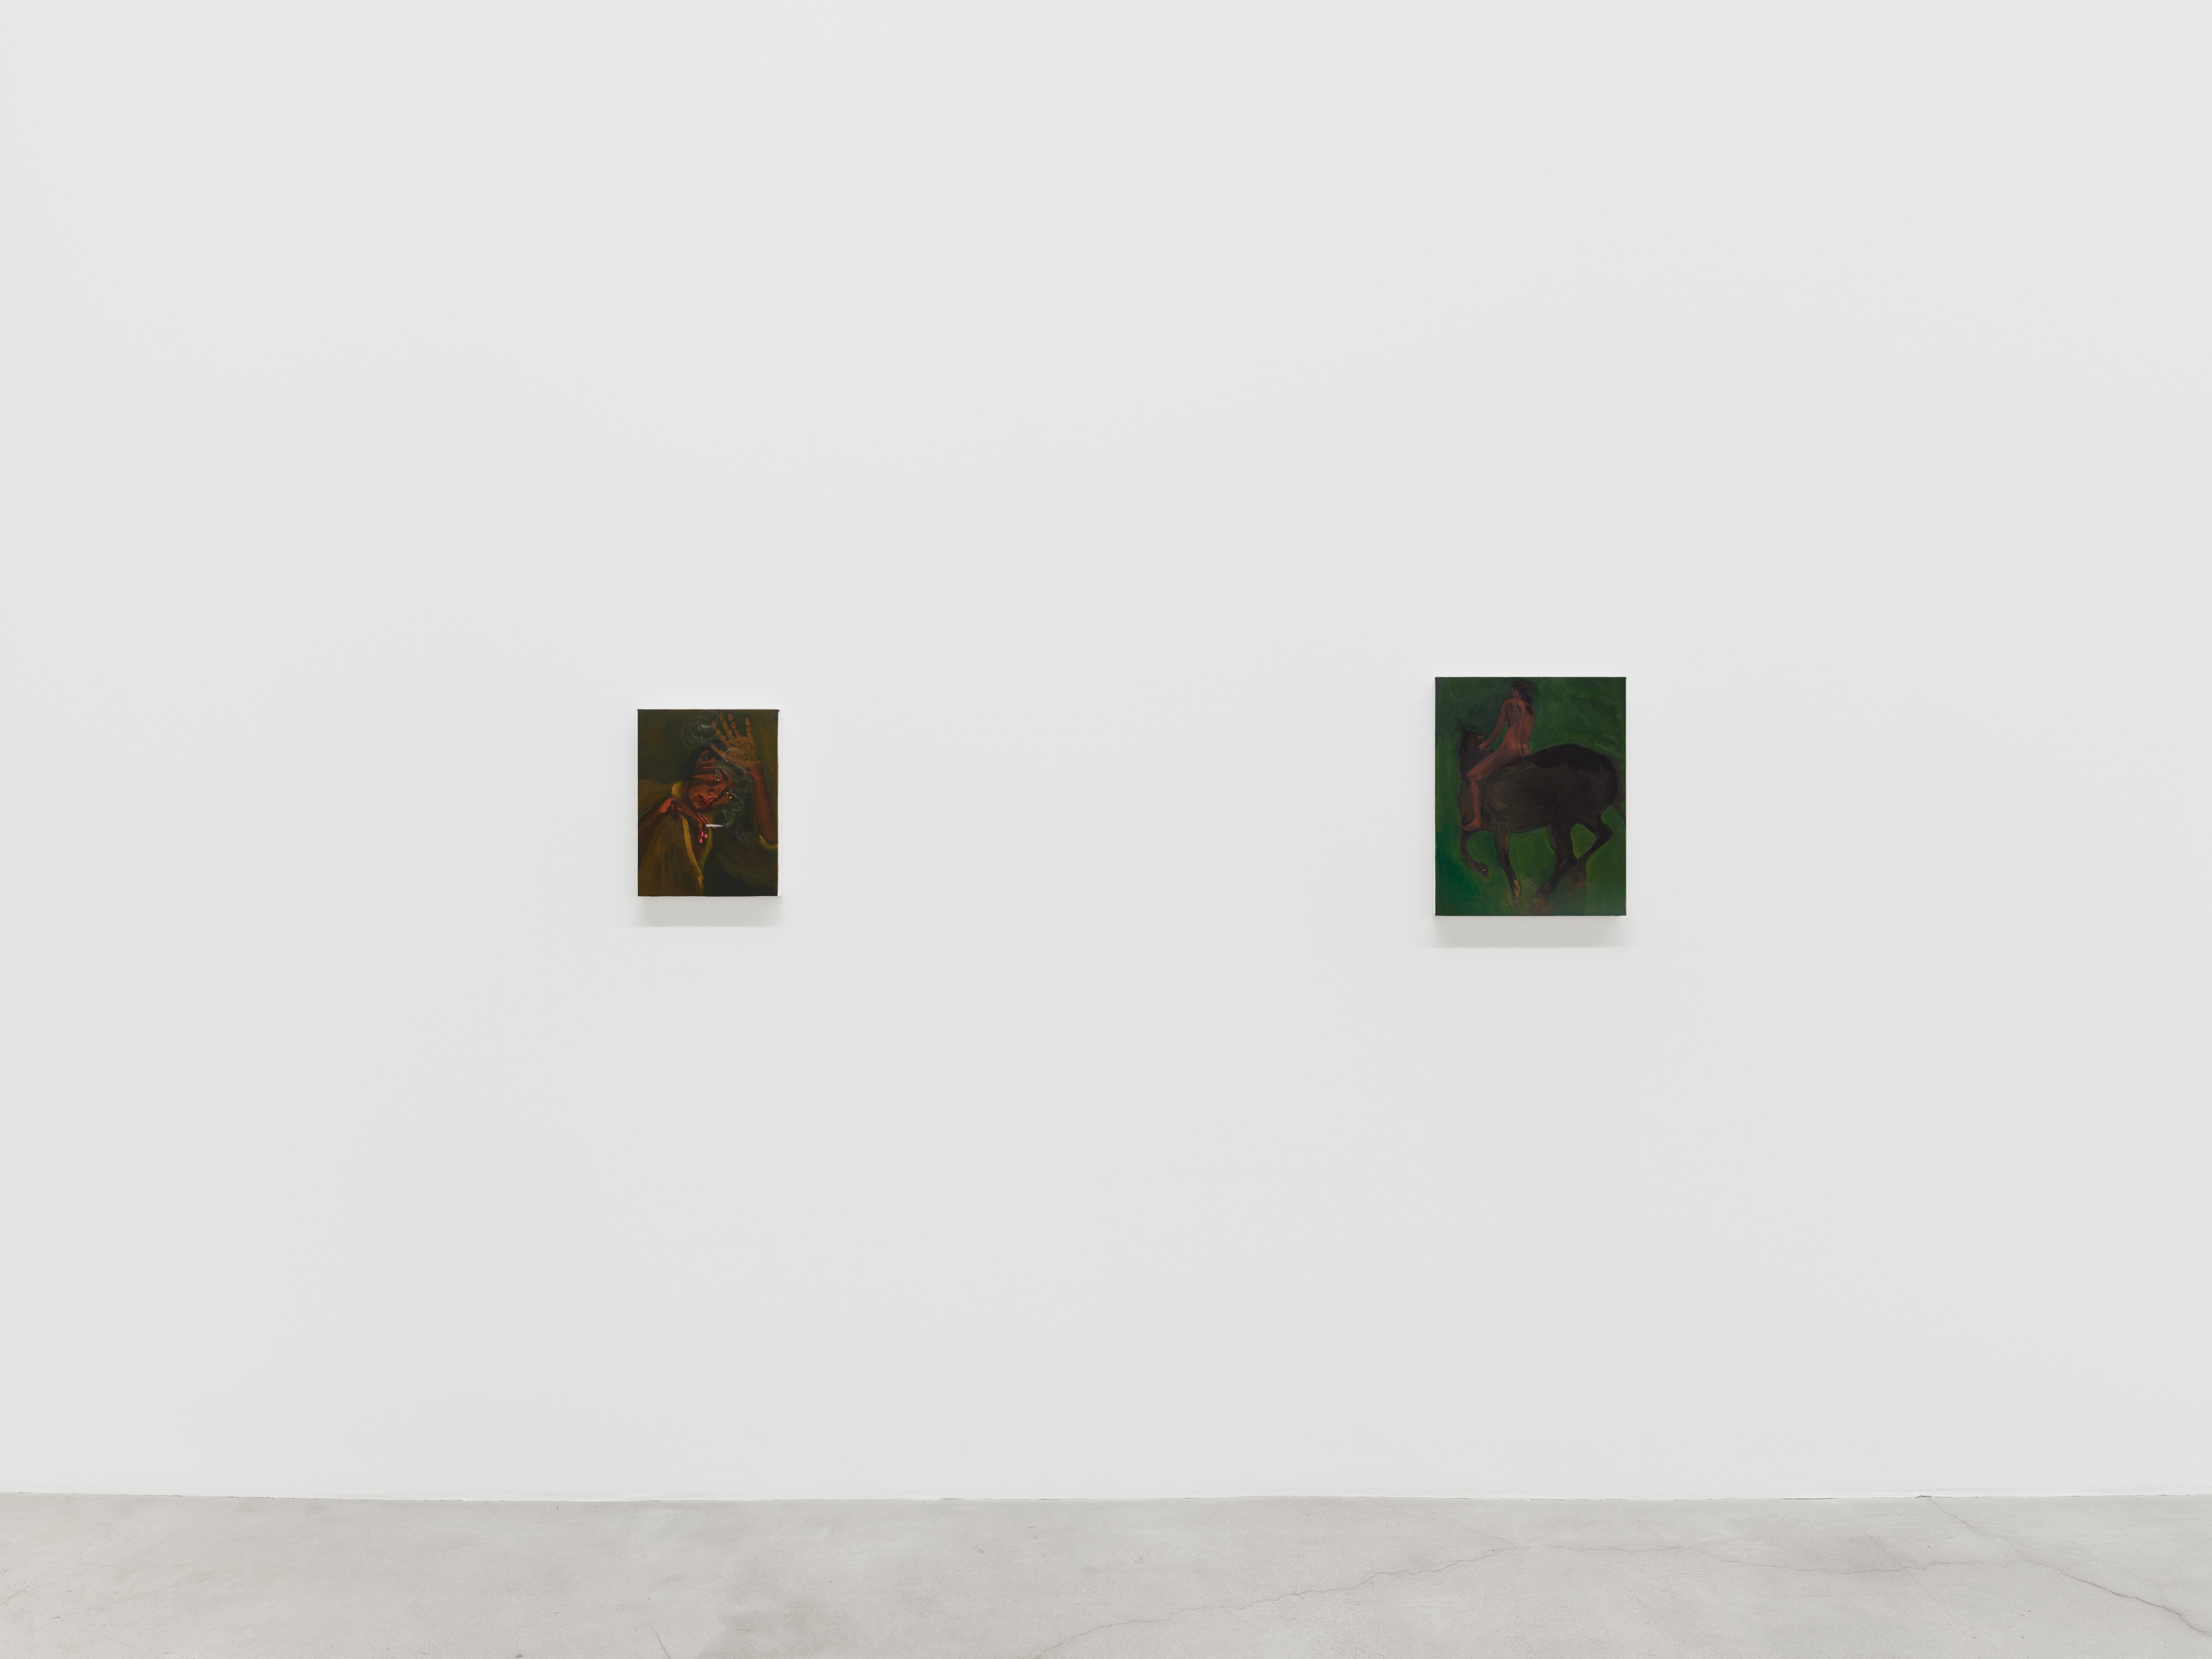 Danielle Mckinney, Smoke and Mirrors, installation view, 2021